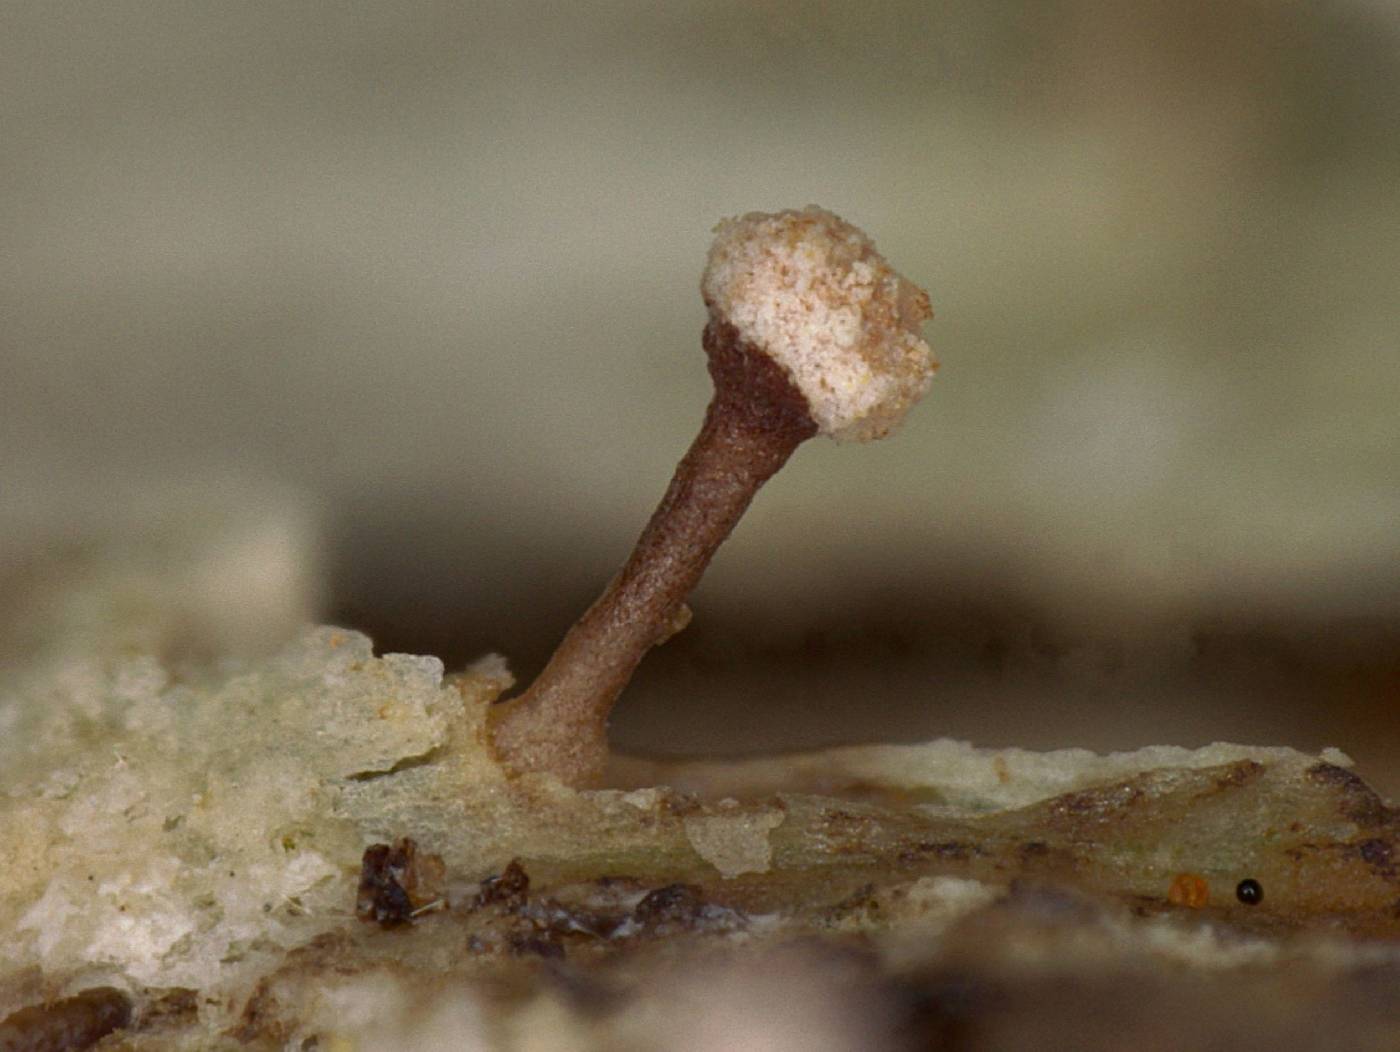 Sclerophora image